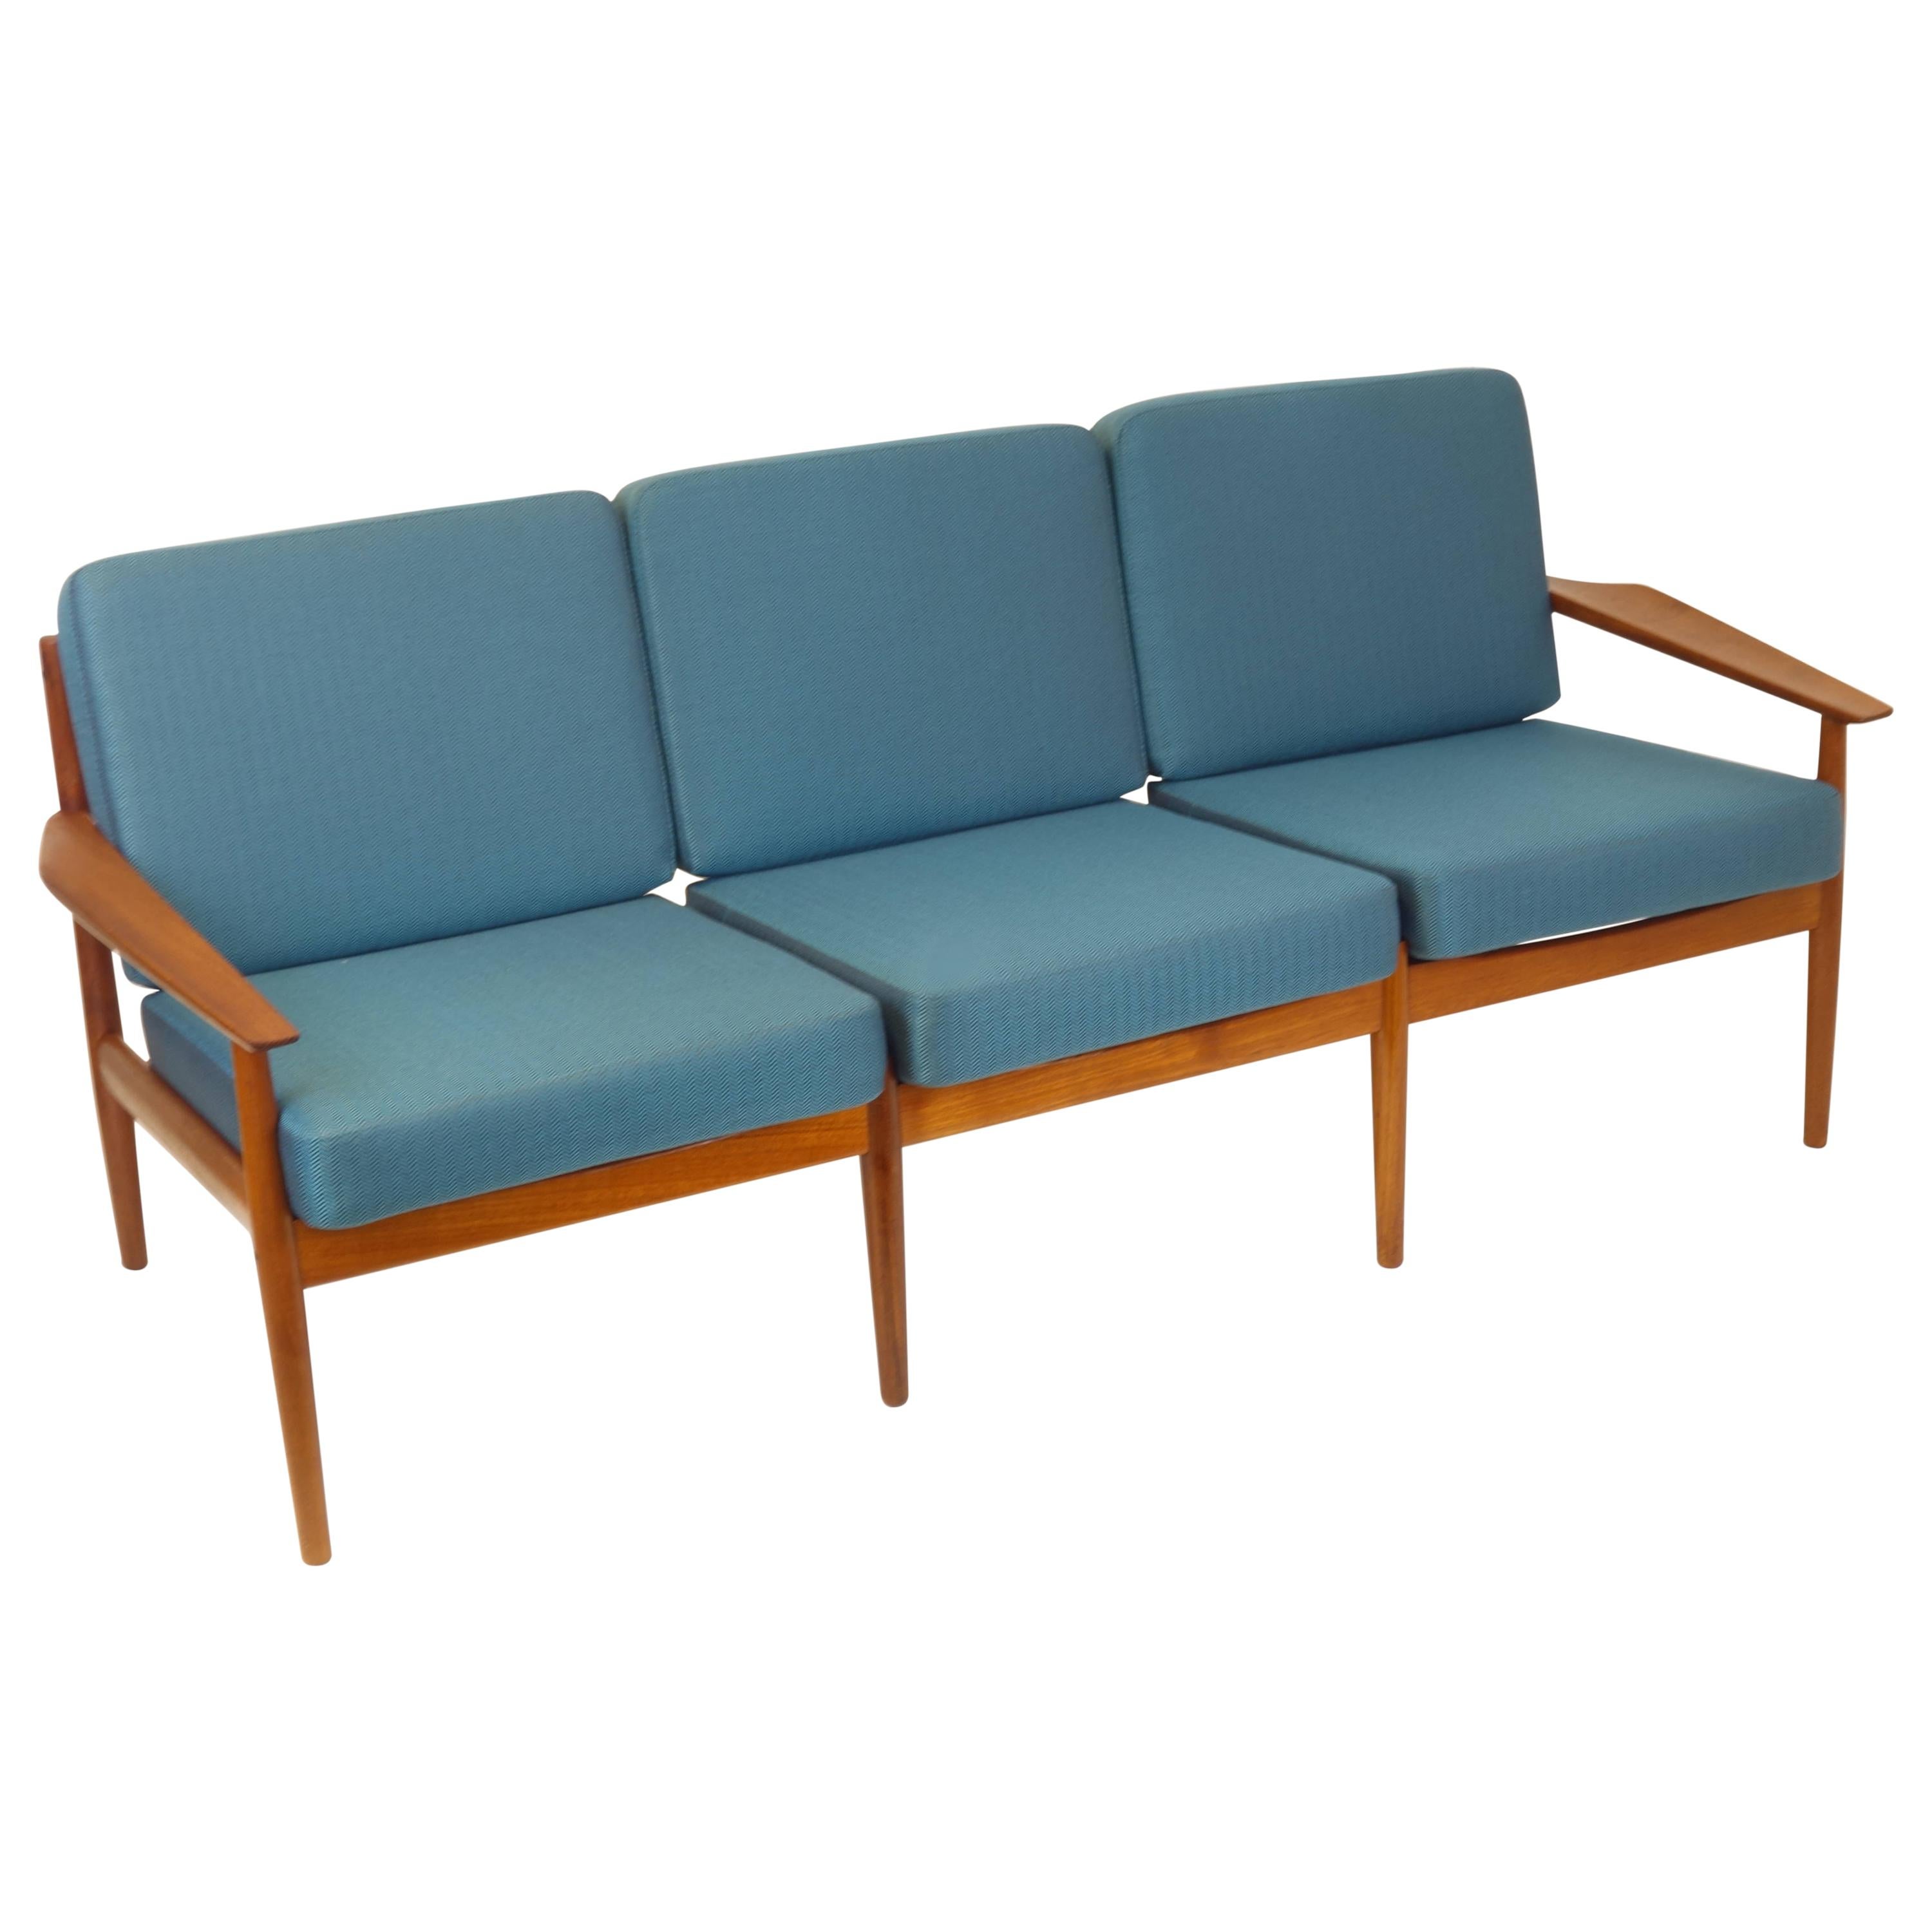 Couch 3-Seater Original Sofa by Grete Jalk Dansk Mobler Teakwood, Denmark, 1960s